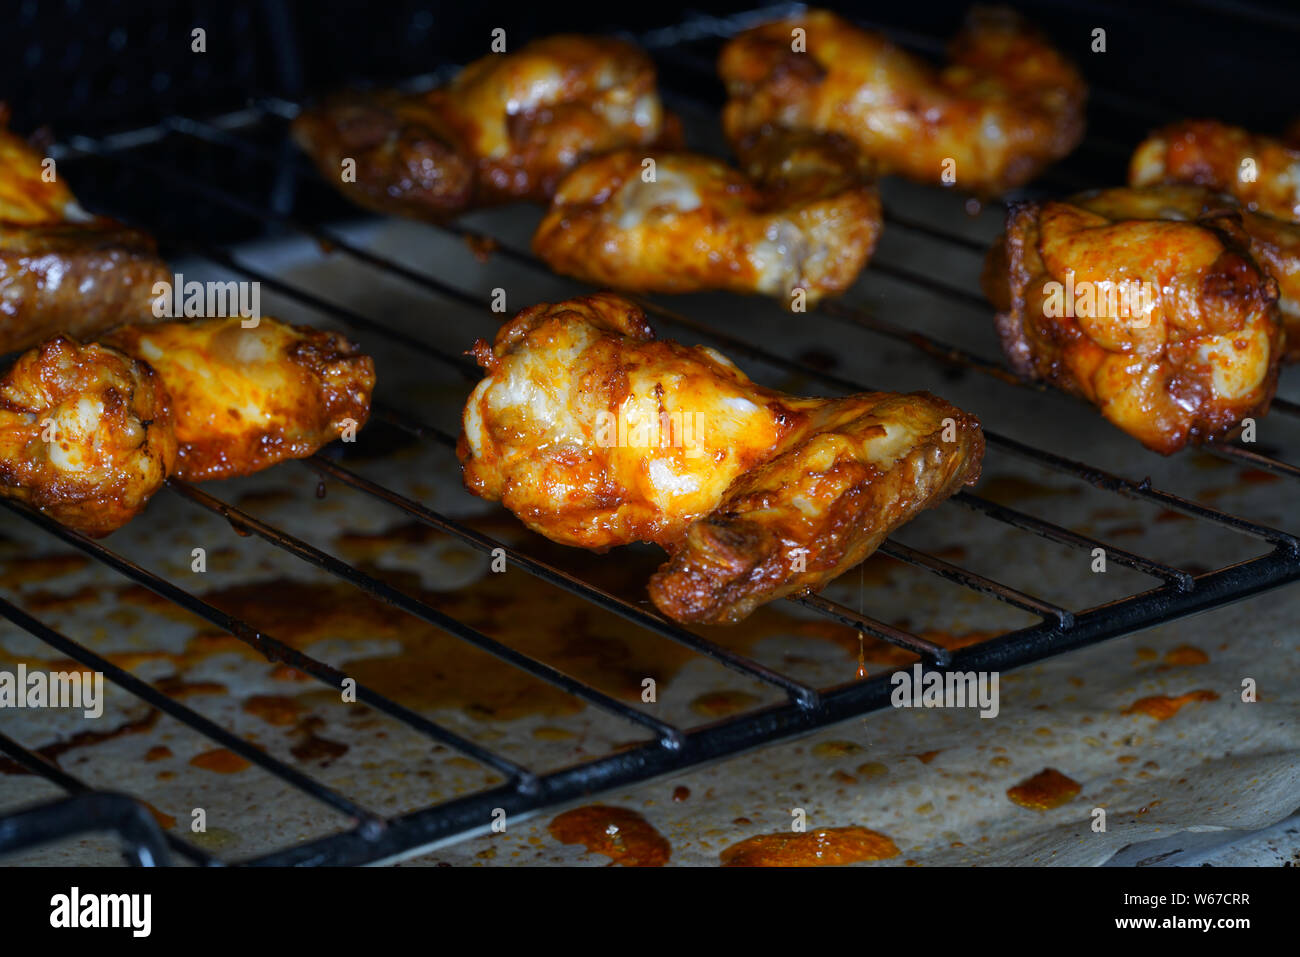 Chicken Wings im Ofen knusprig gebraten Stockfotografie - Alamy